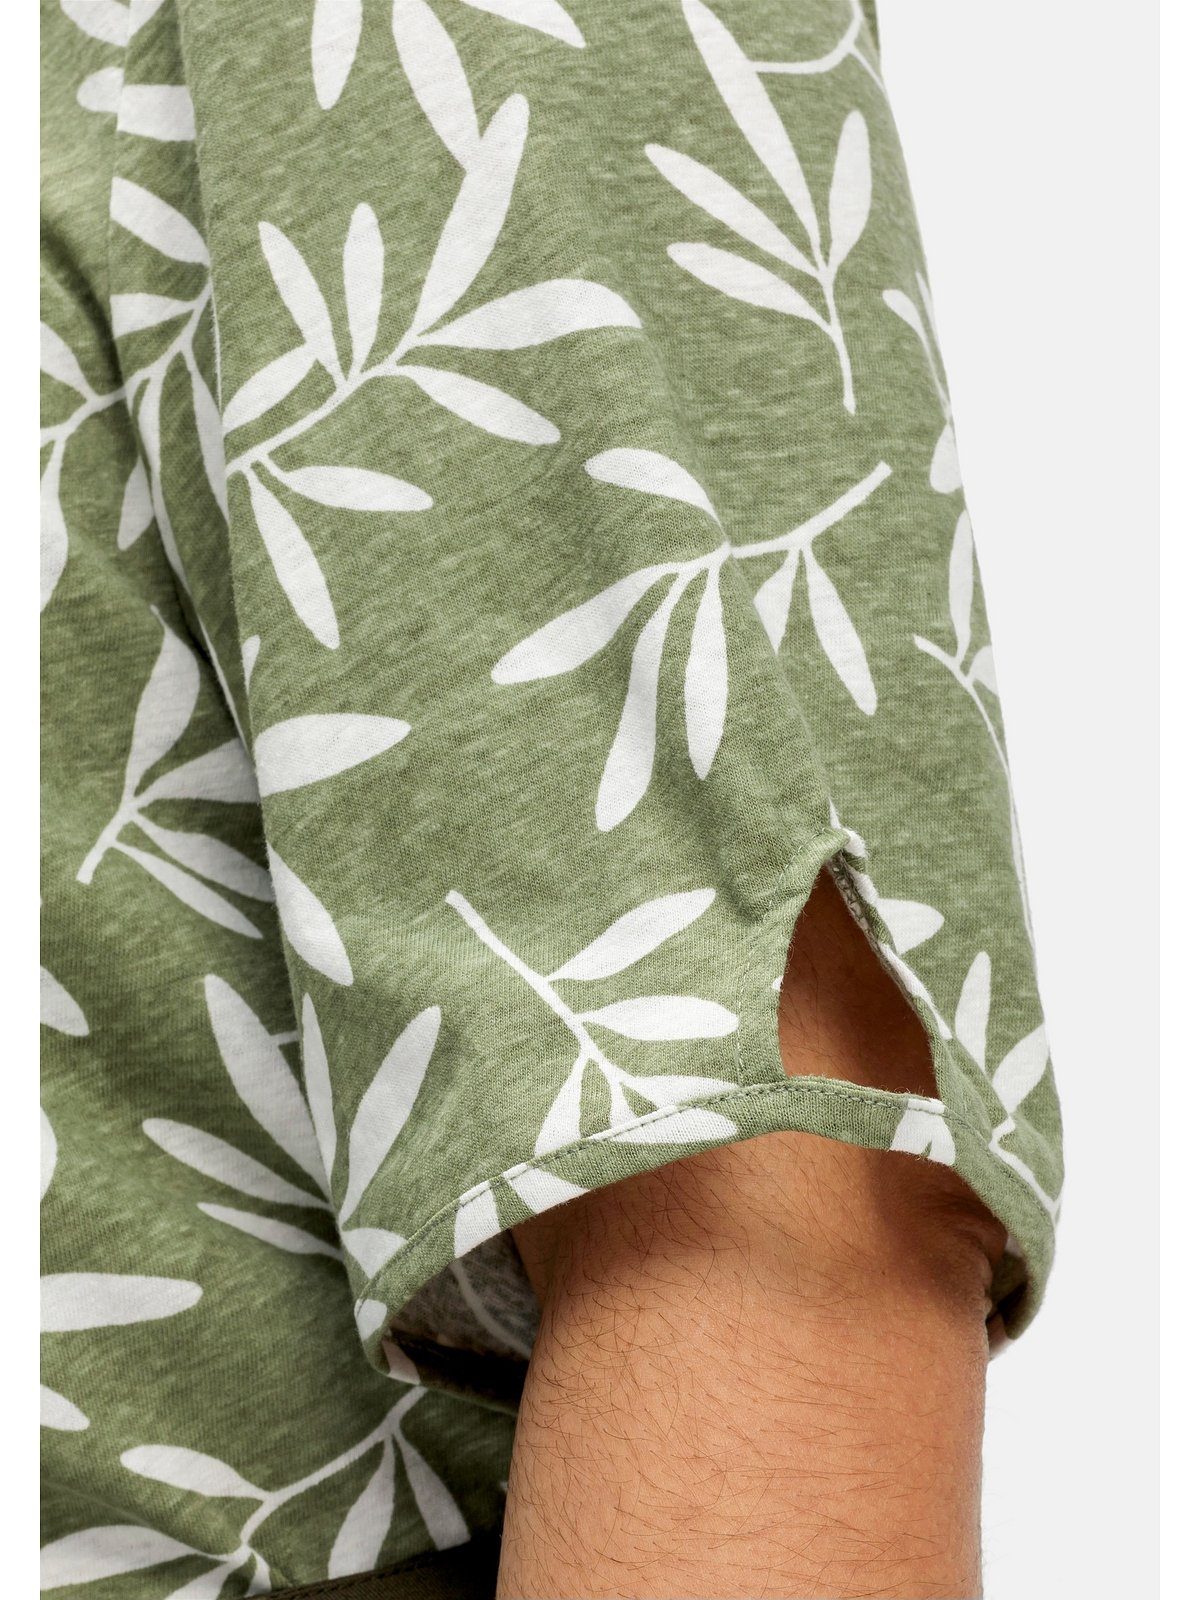 T-Shirt khaki Größen im Blätterprint, Große Leinen-Mix gemustert mit Sheego